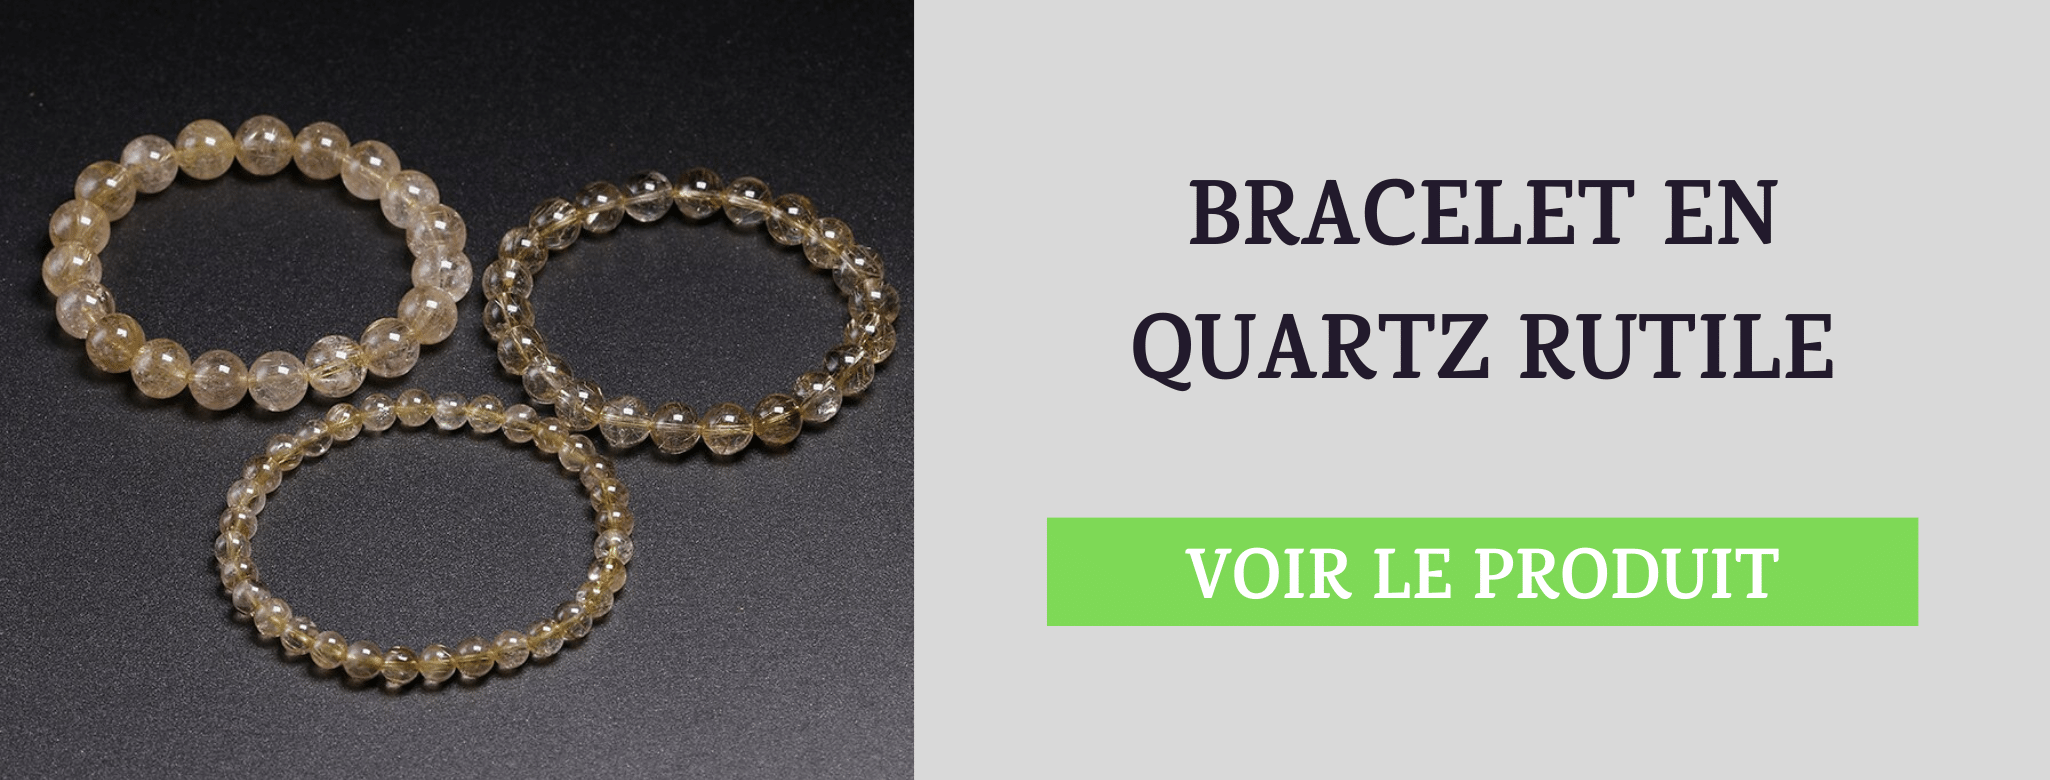 Bracelet Quartz Rutile